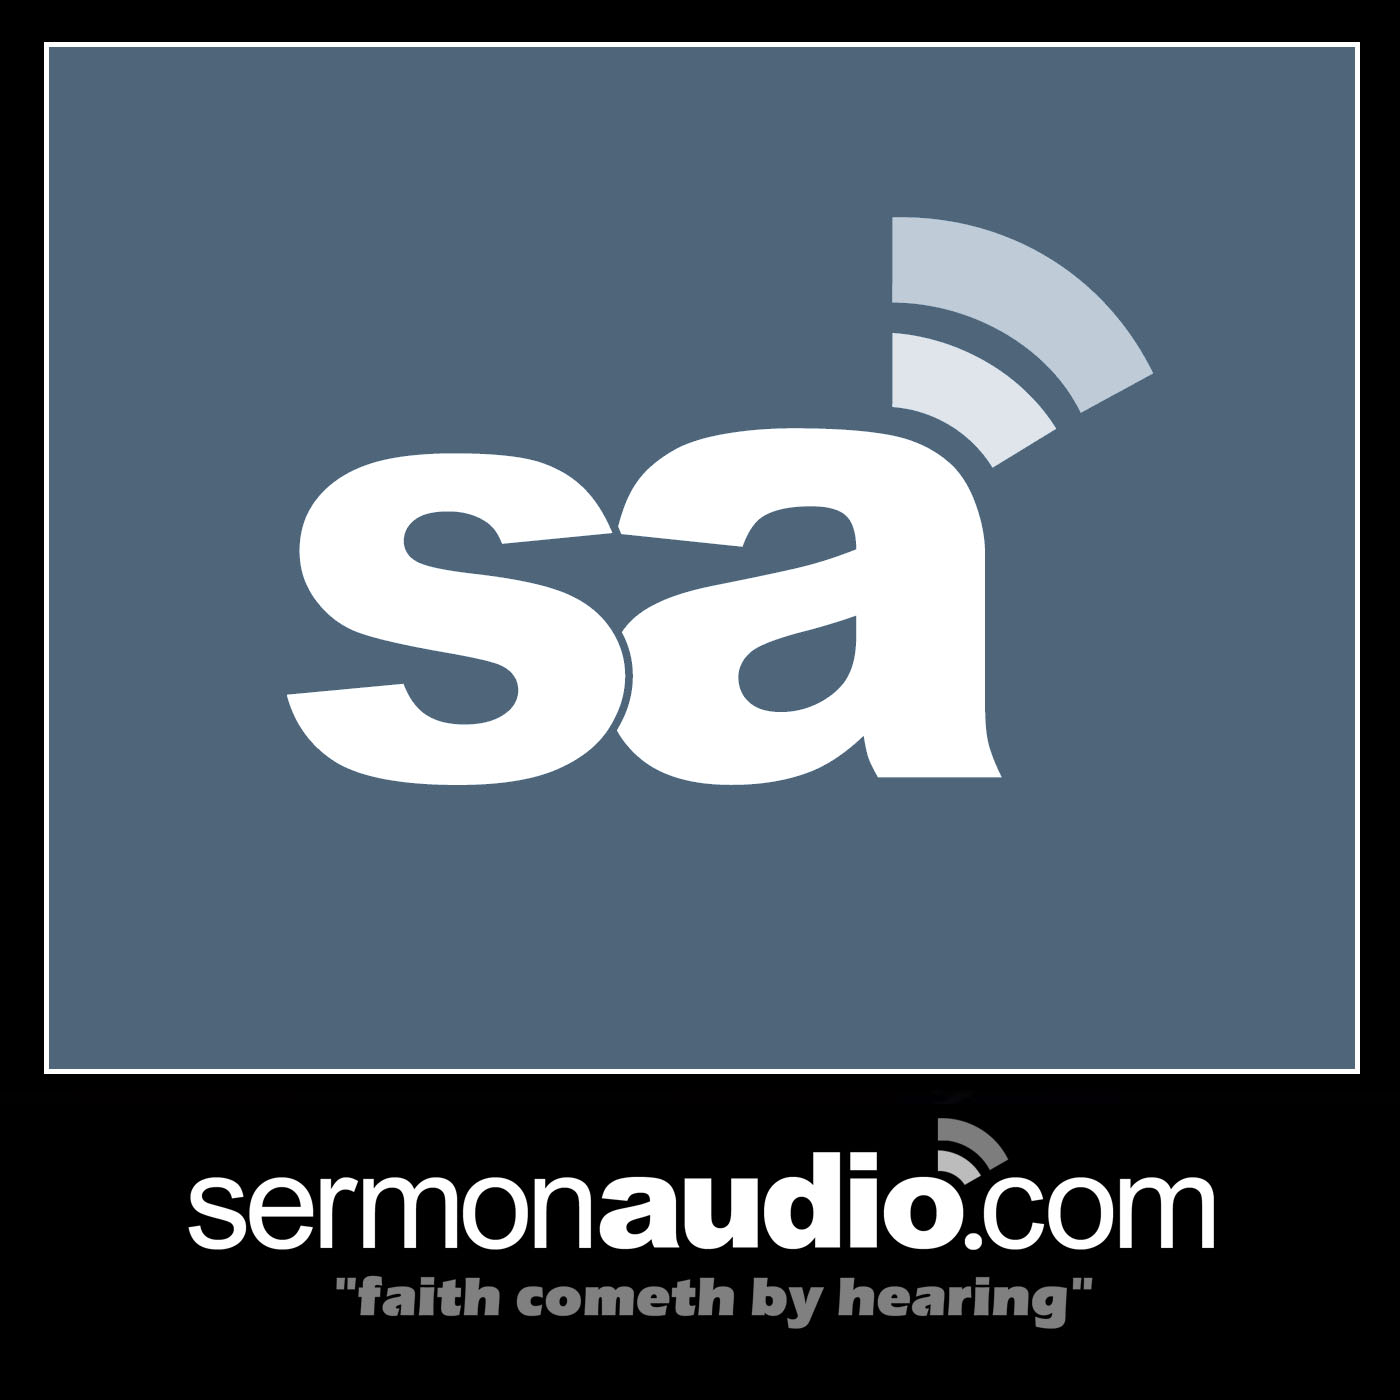 Fresh update on "two words" discussed on Evangelism on SermonAudio